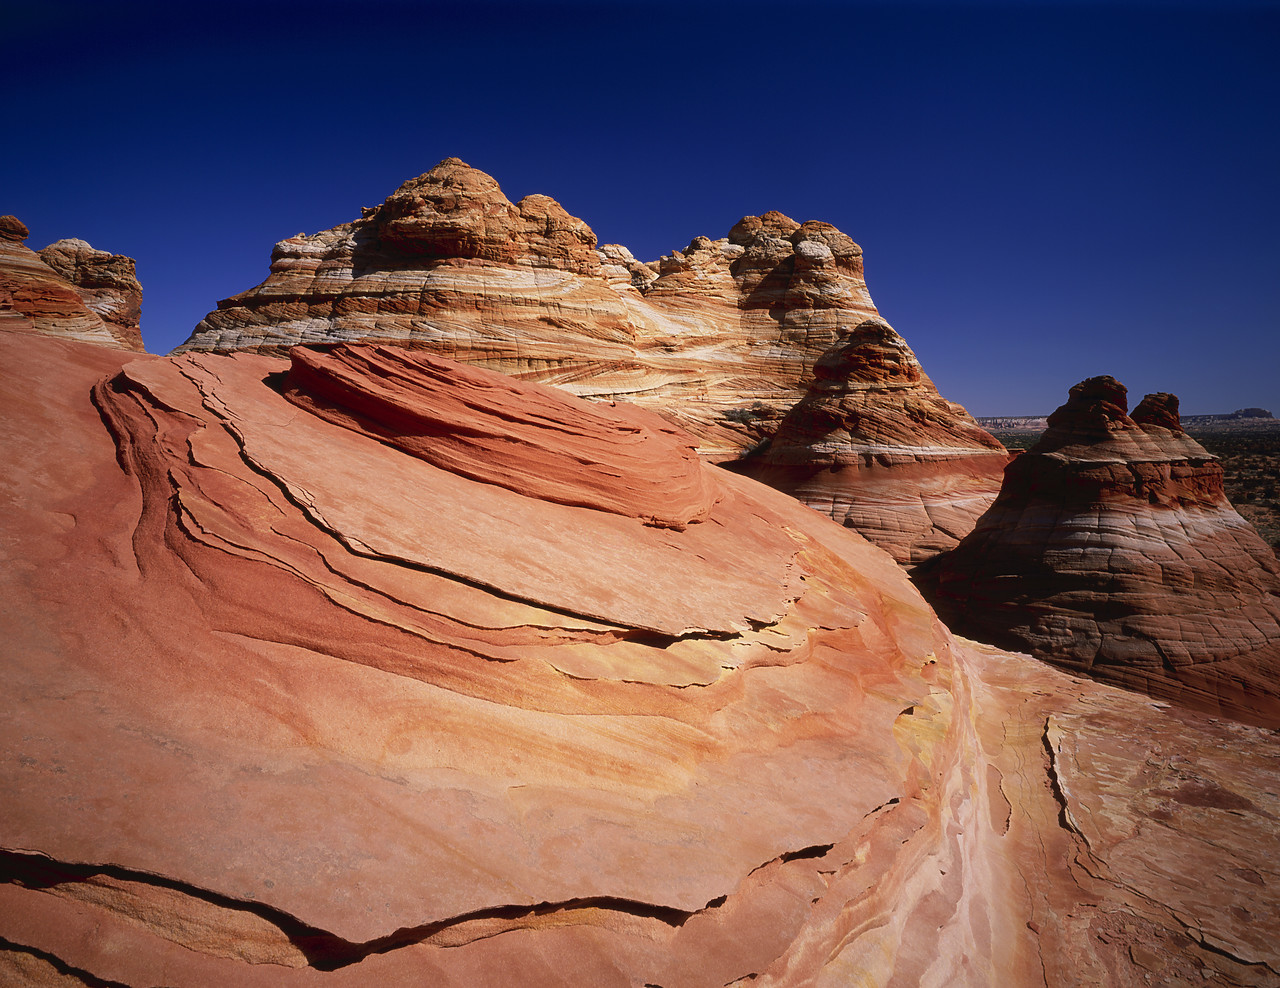 #966216-2 - Hoodoo Formations, Paria Canyon, Arizona, USA